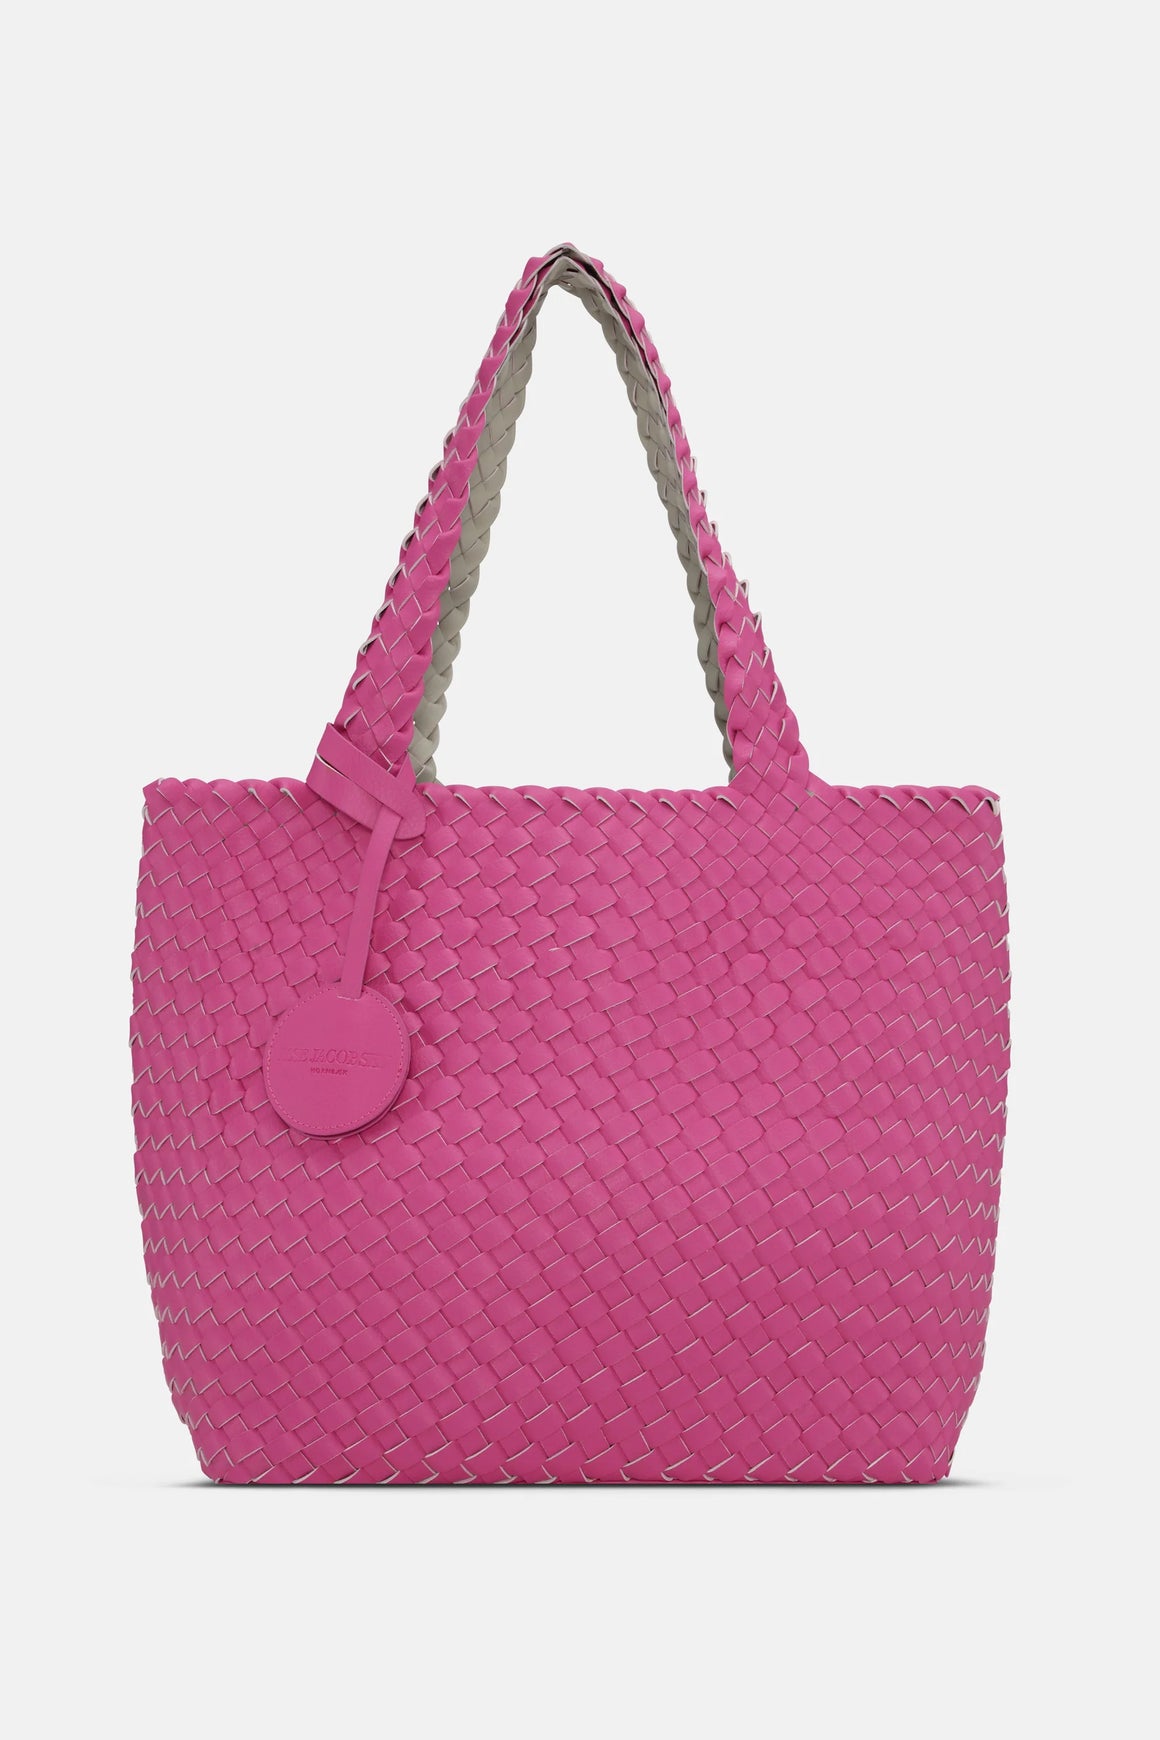 Ilse Jacobsen Bag 08 Pink Sand